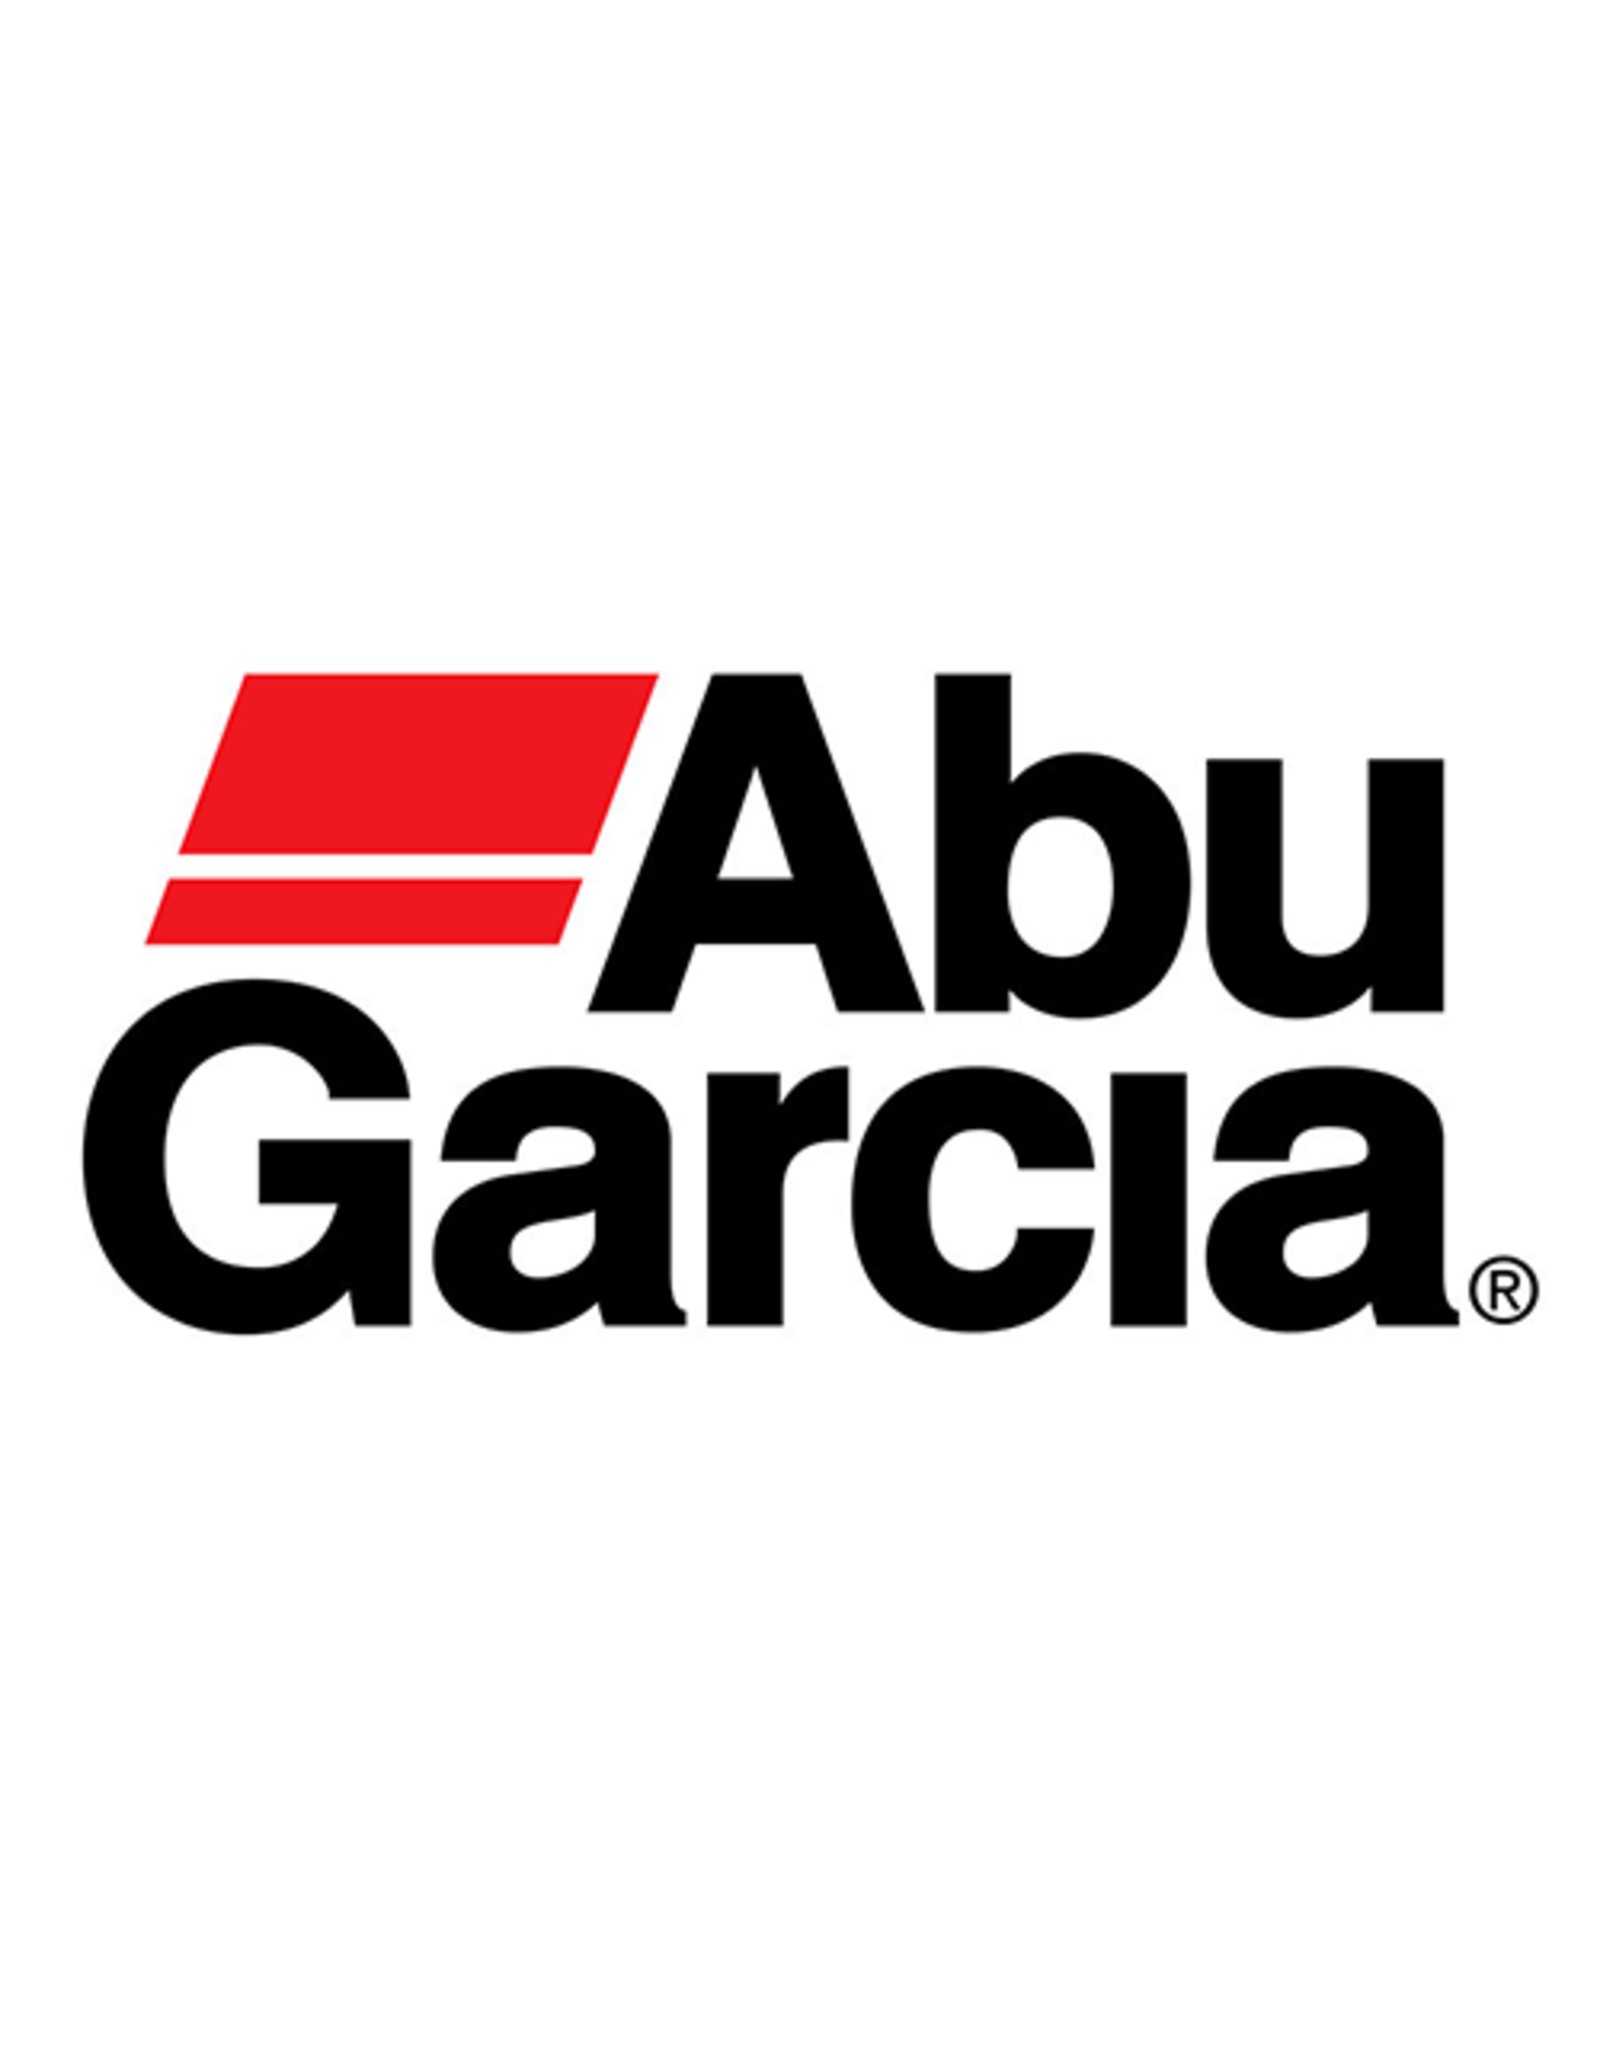 Abu Garcia 1085544  BALL BEARING